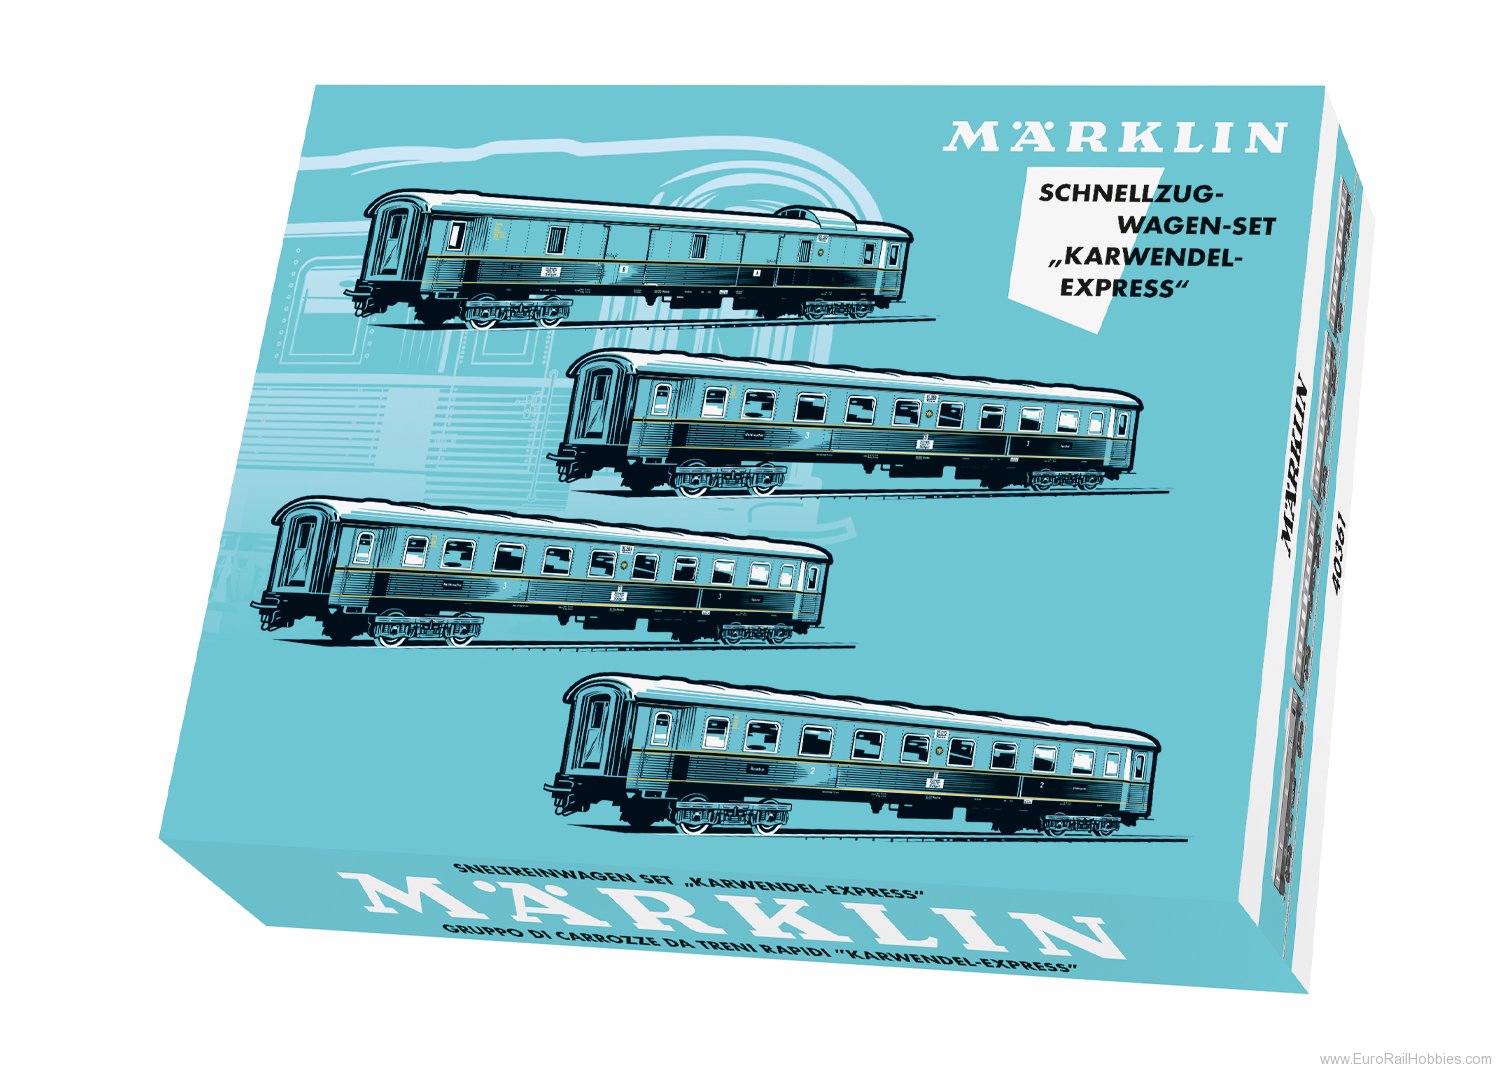 Marklin 40361 DRG Karwendel Express Express Train Car Set (